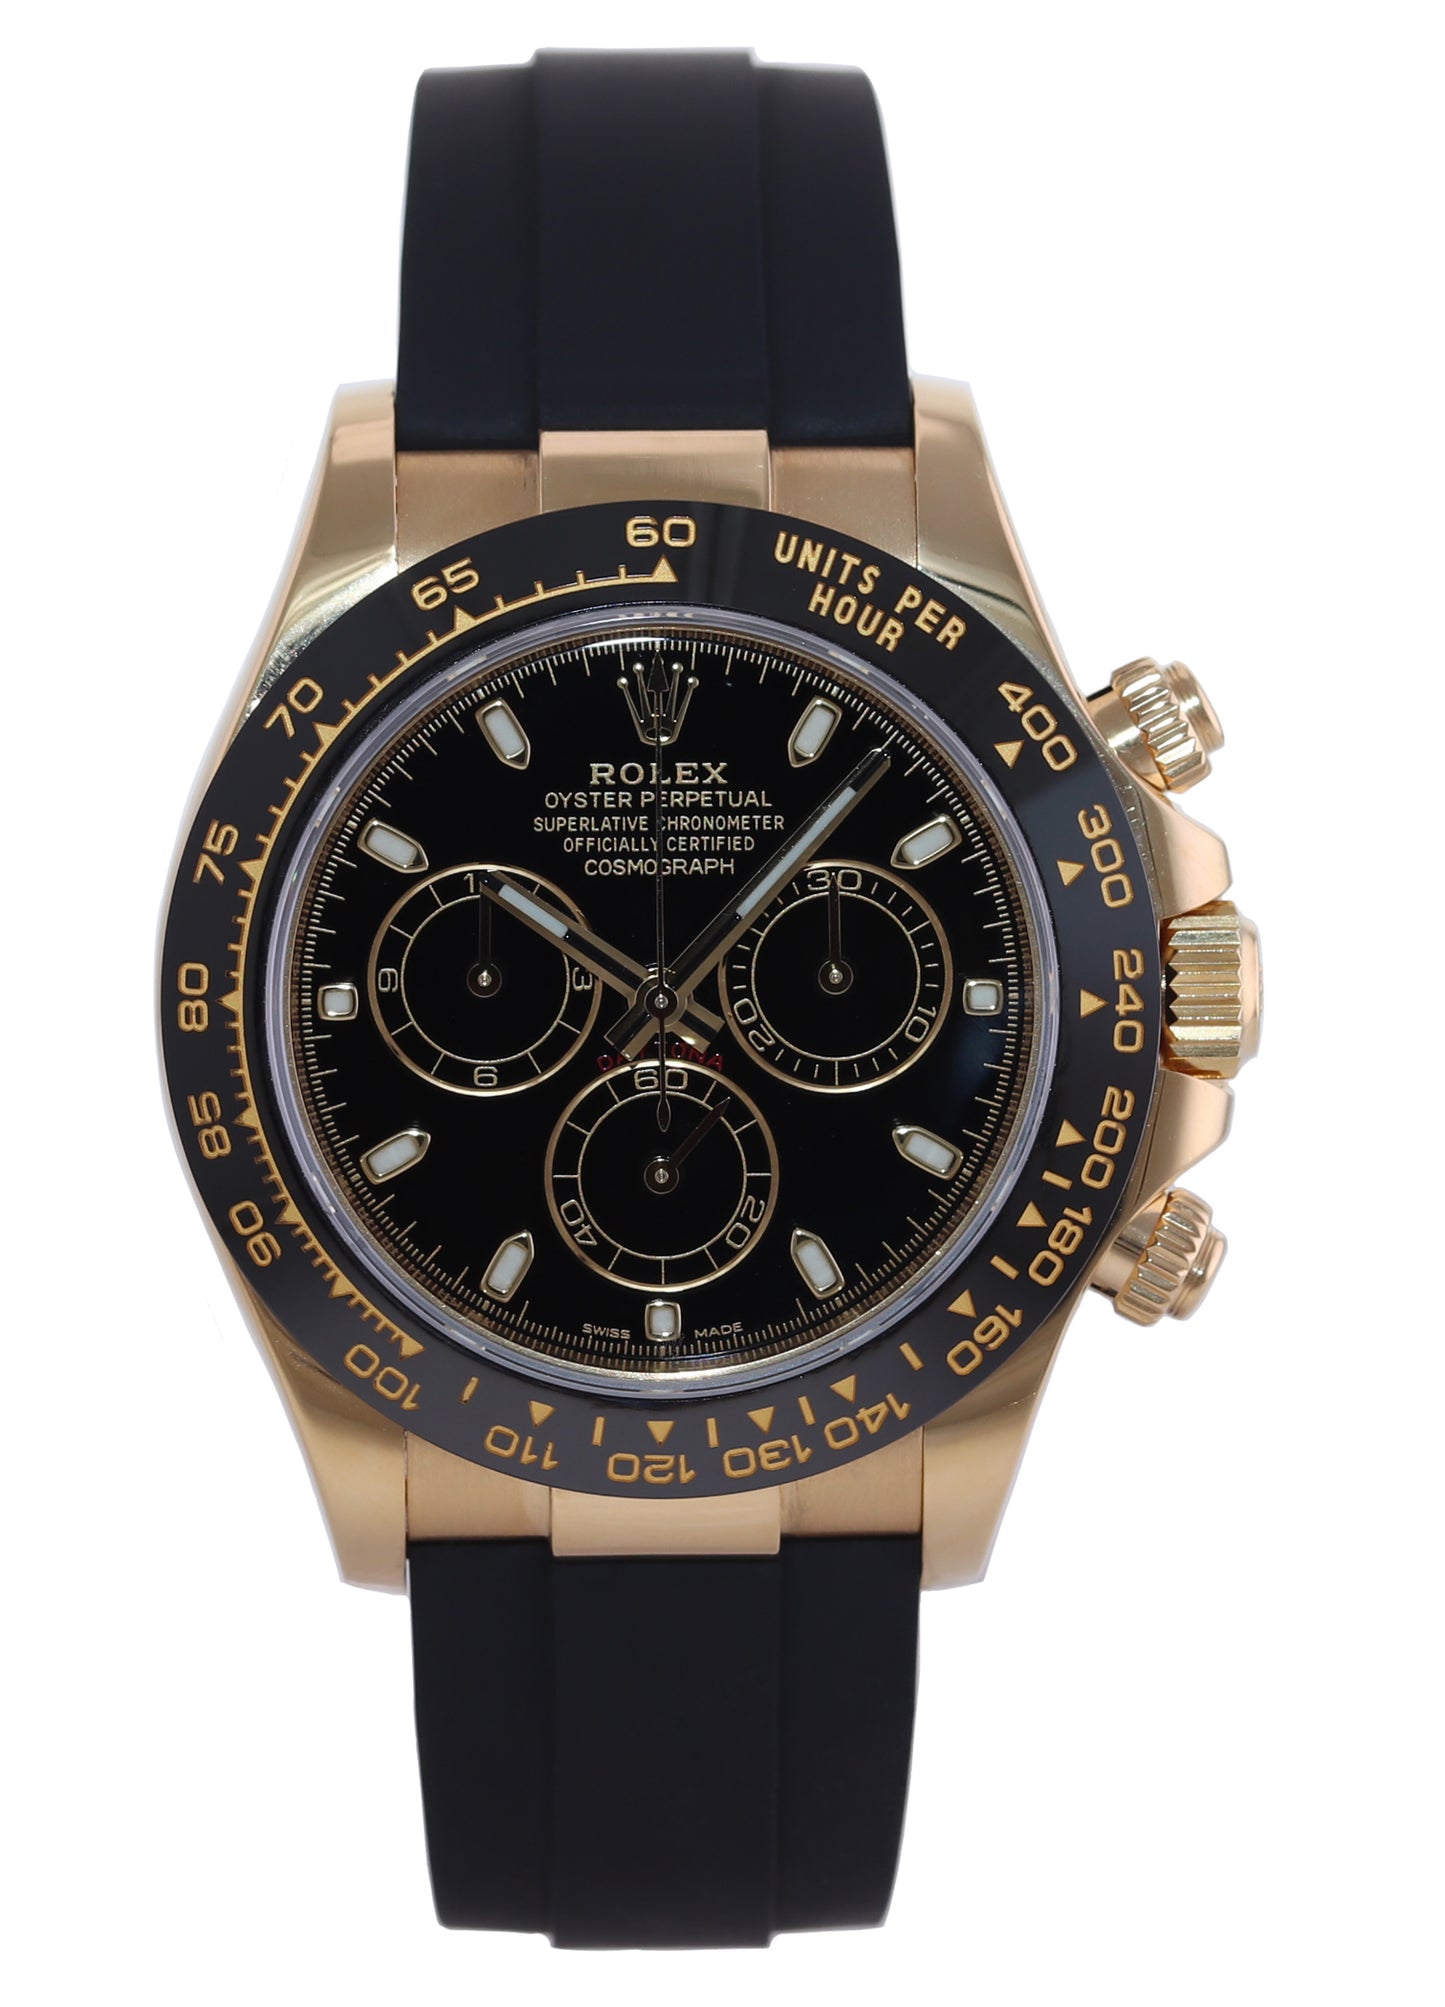 MINT 2021 Rolex Oysterflex Daytona 116518LN Yellow Gold Black Ceramic Watch